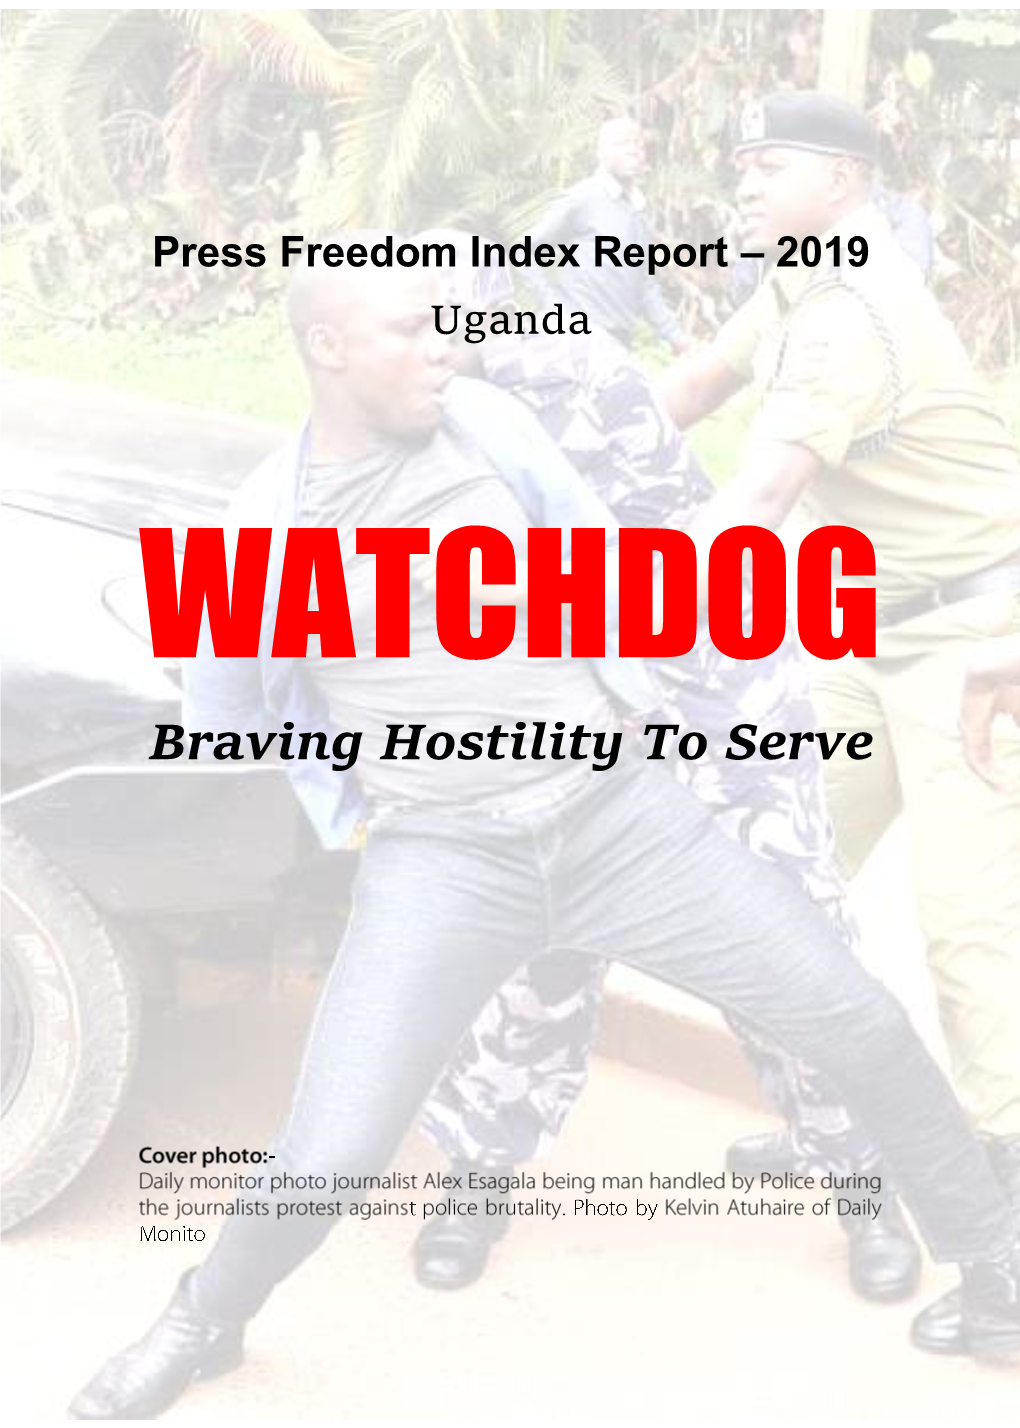 Press Freedom Index 2019: WATCHDOG-Braving Hostility To